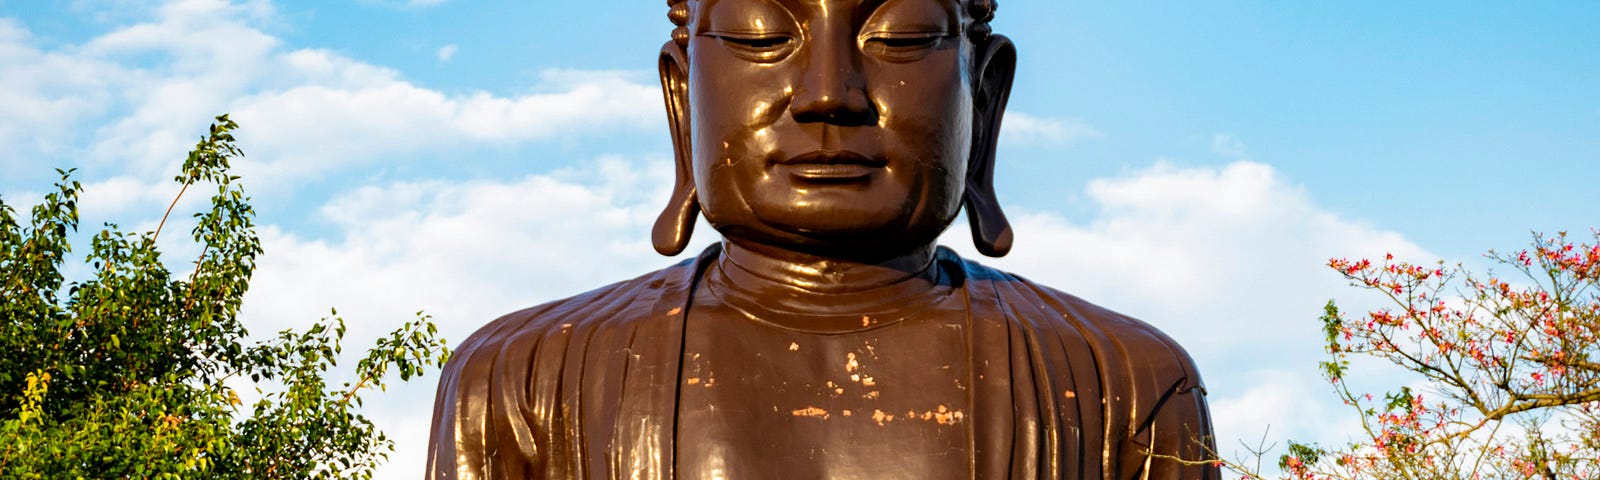 Statue of Lord Buddha.